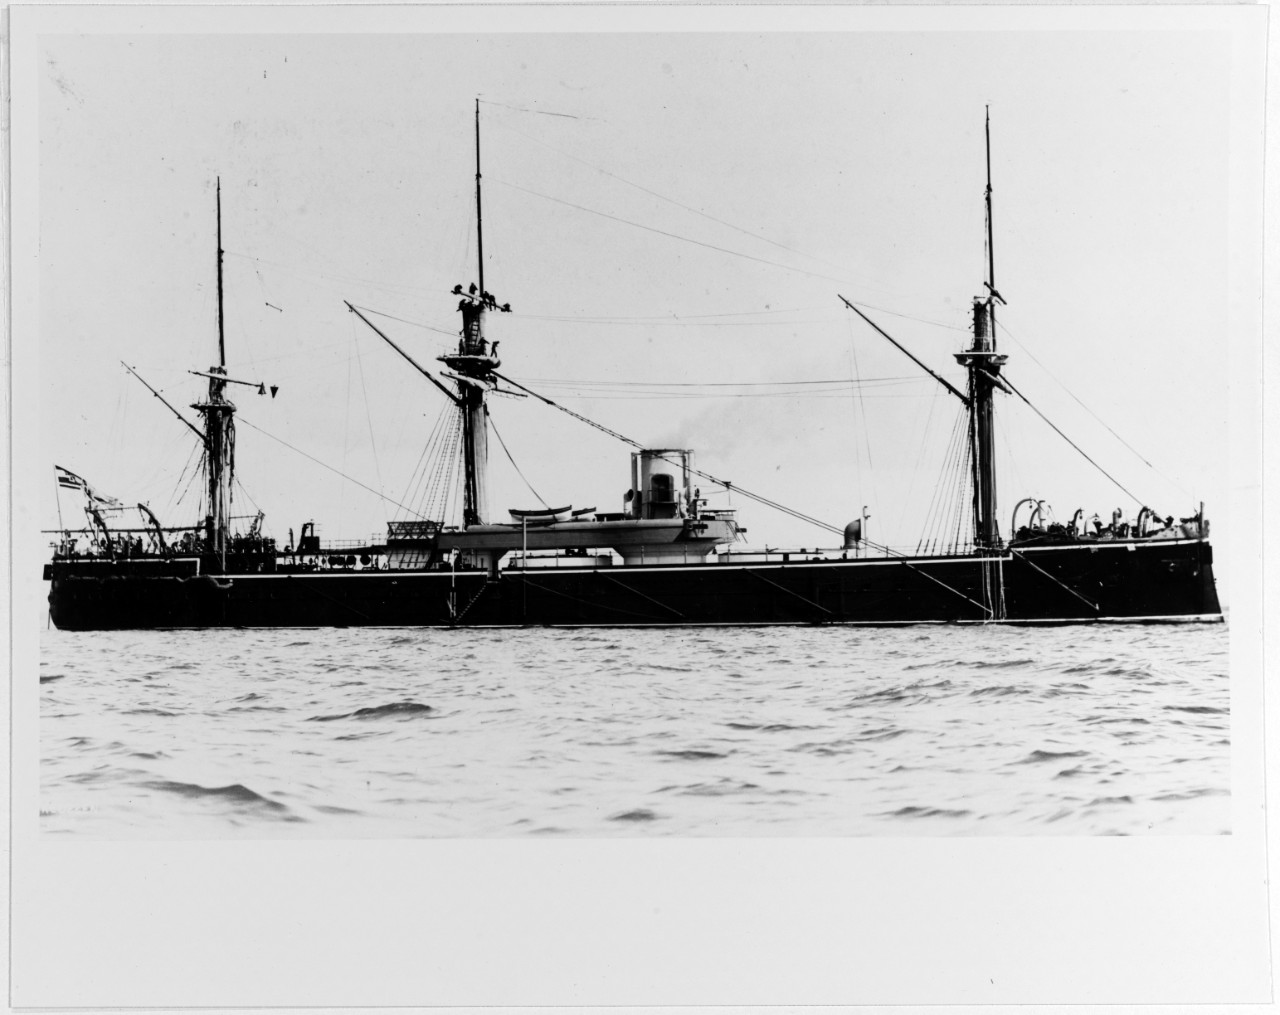 PREUSSEN (German Battleship, 1873-1919)